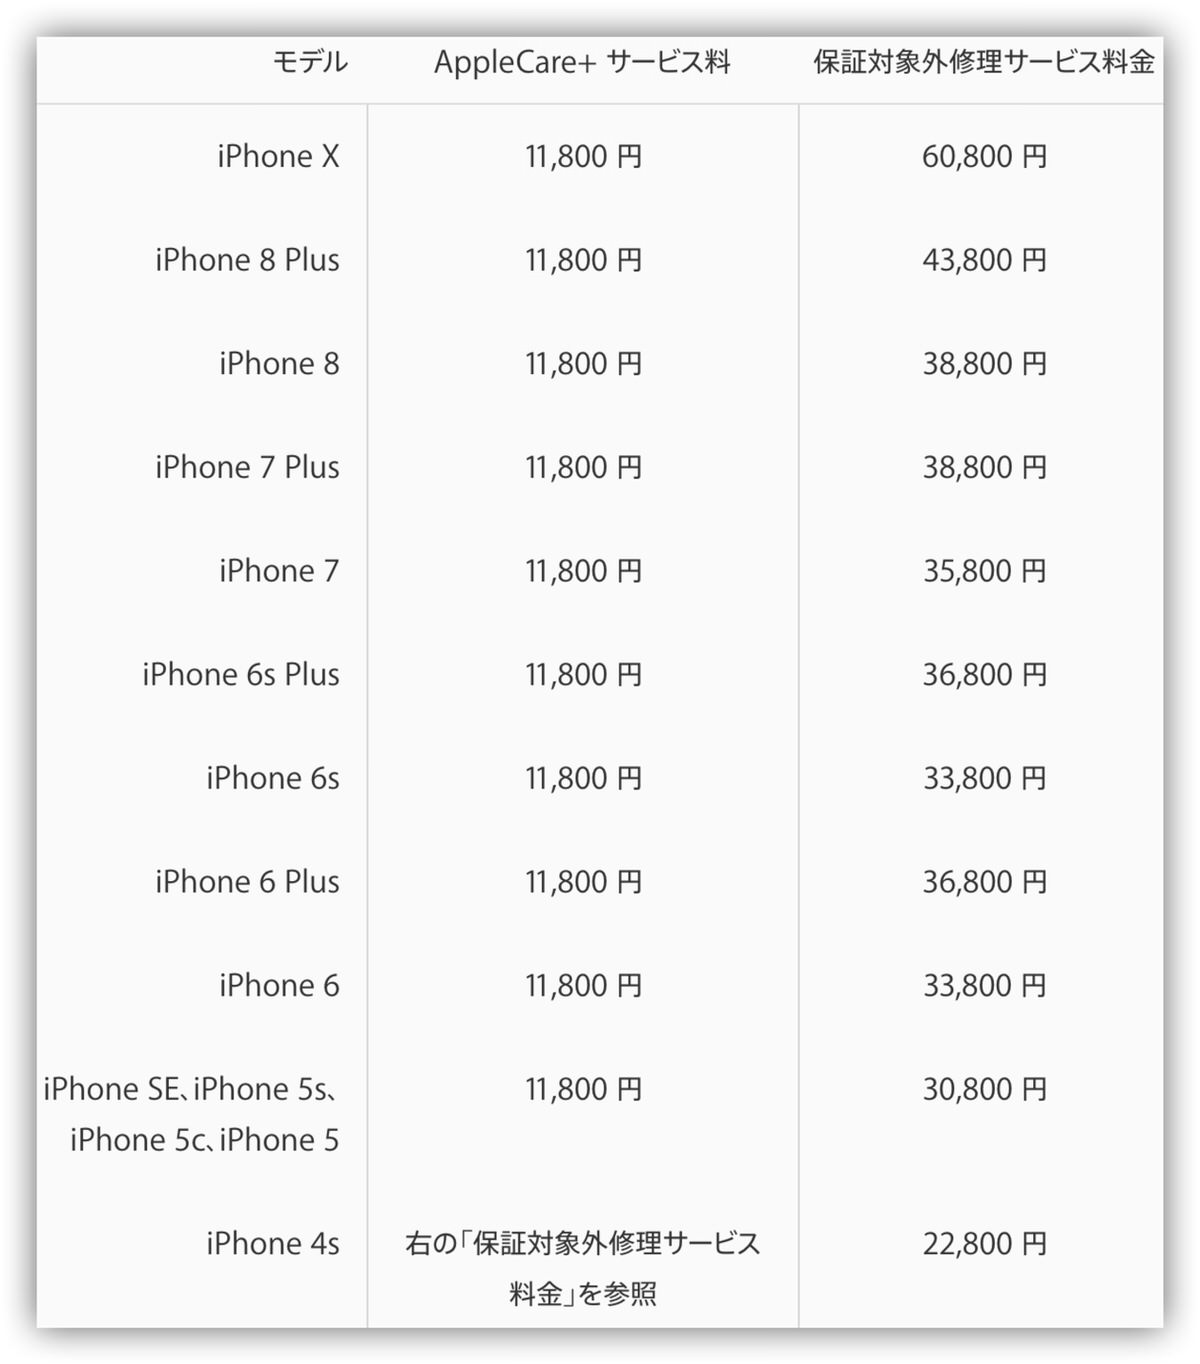 AppleCare+料金表